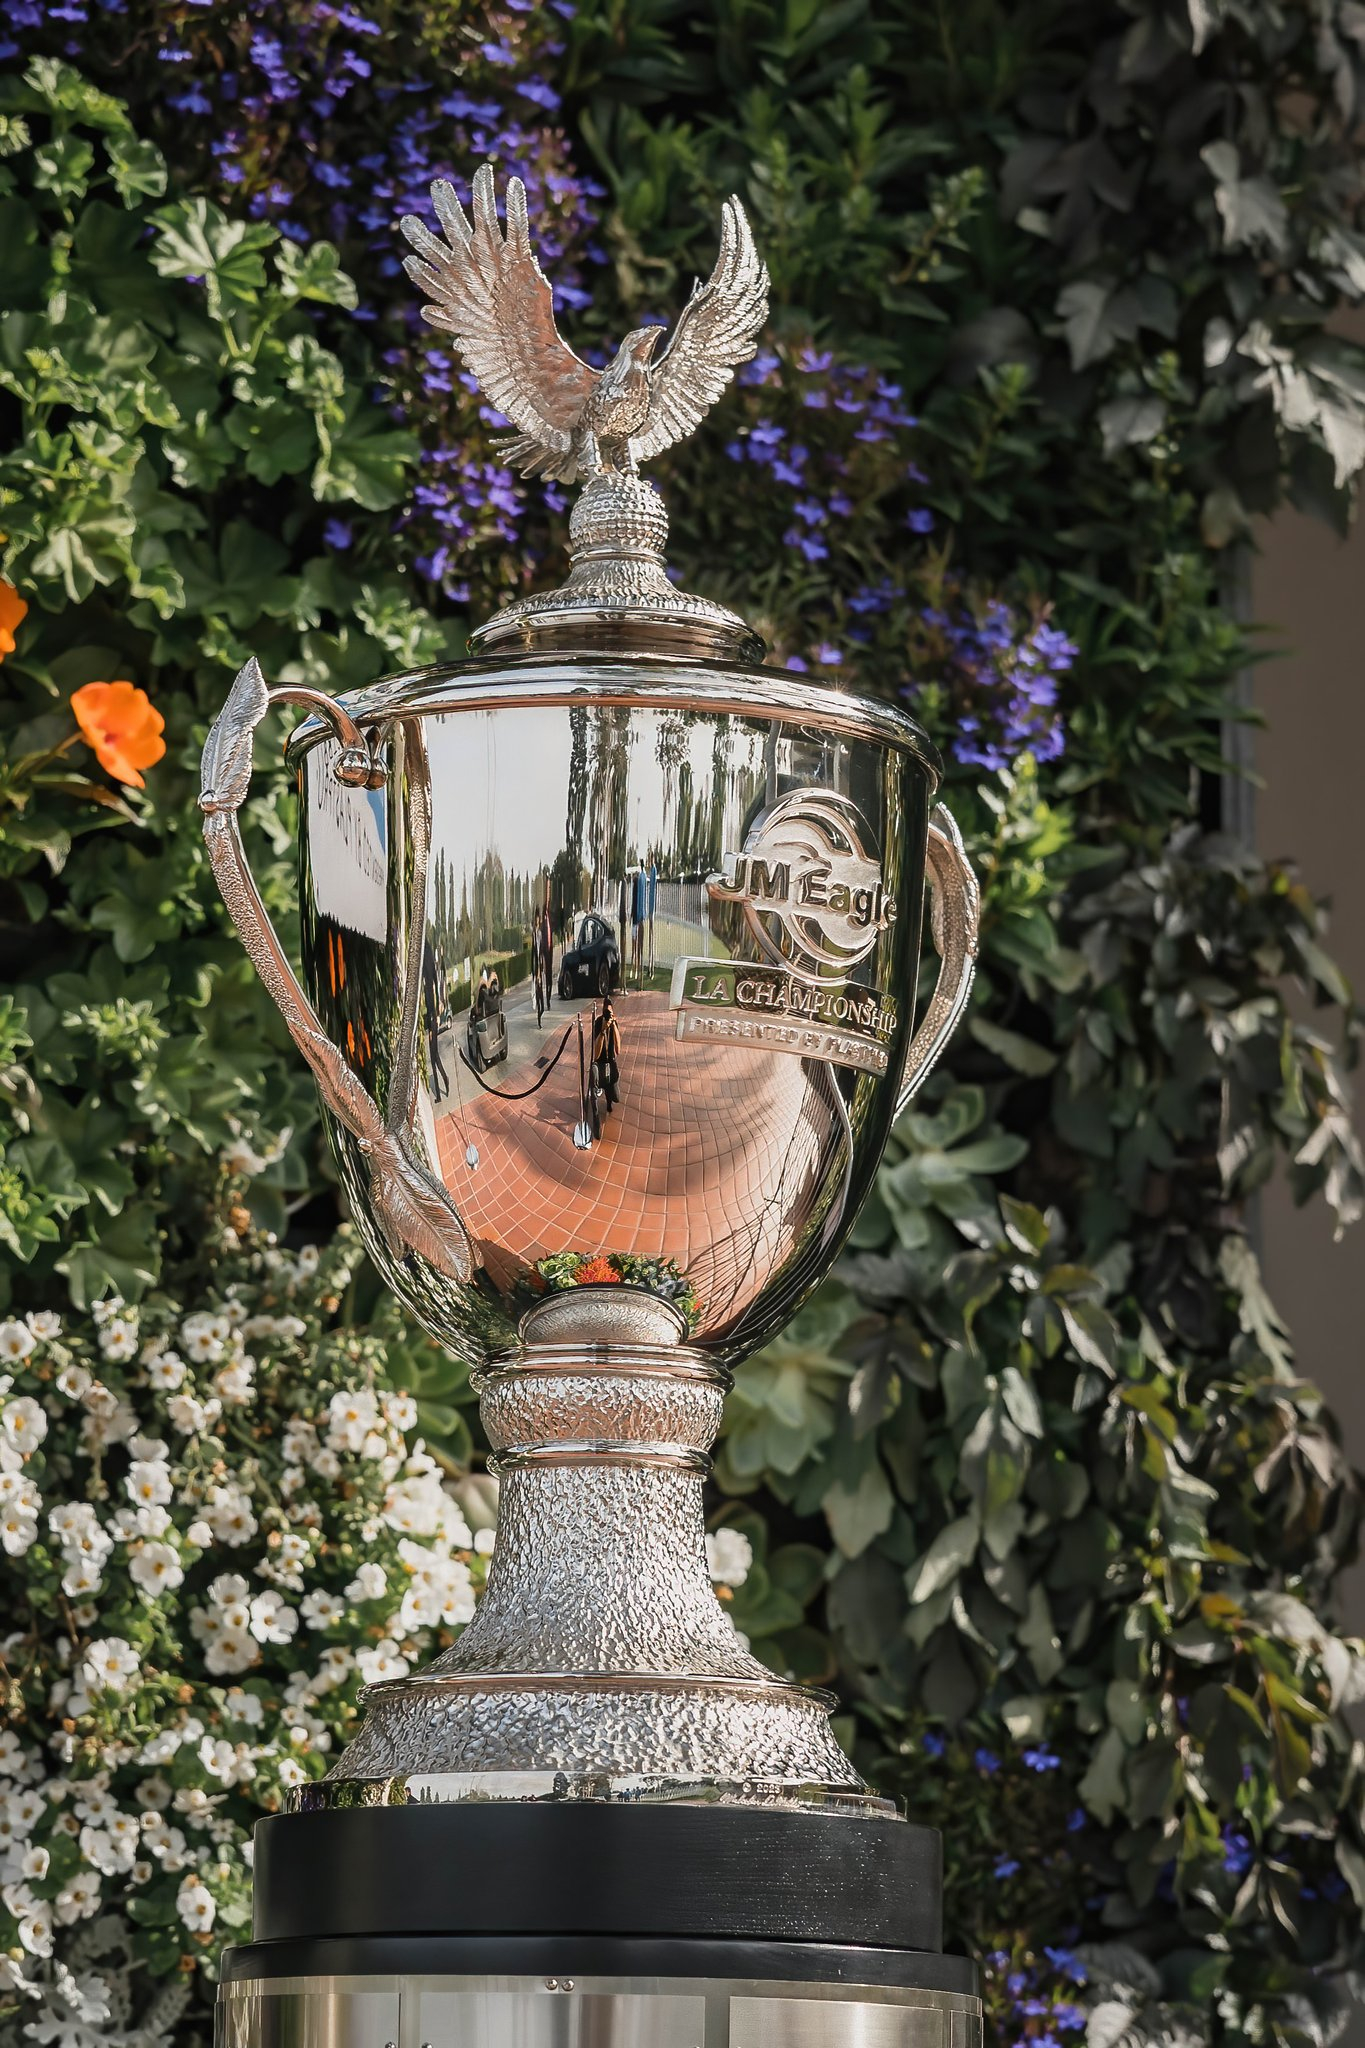 JM Eagle LA Championship Trophy made by Malcolm DeMille